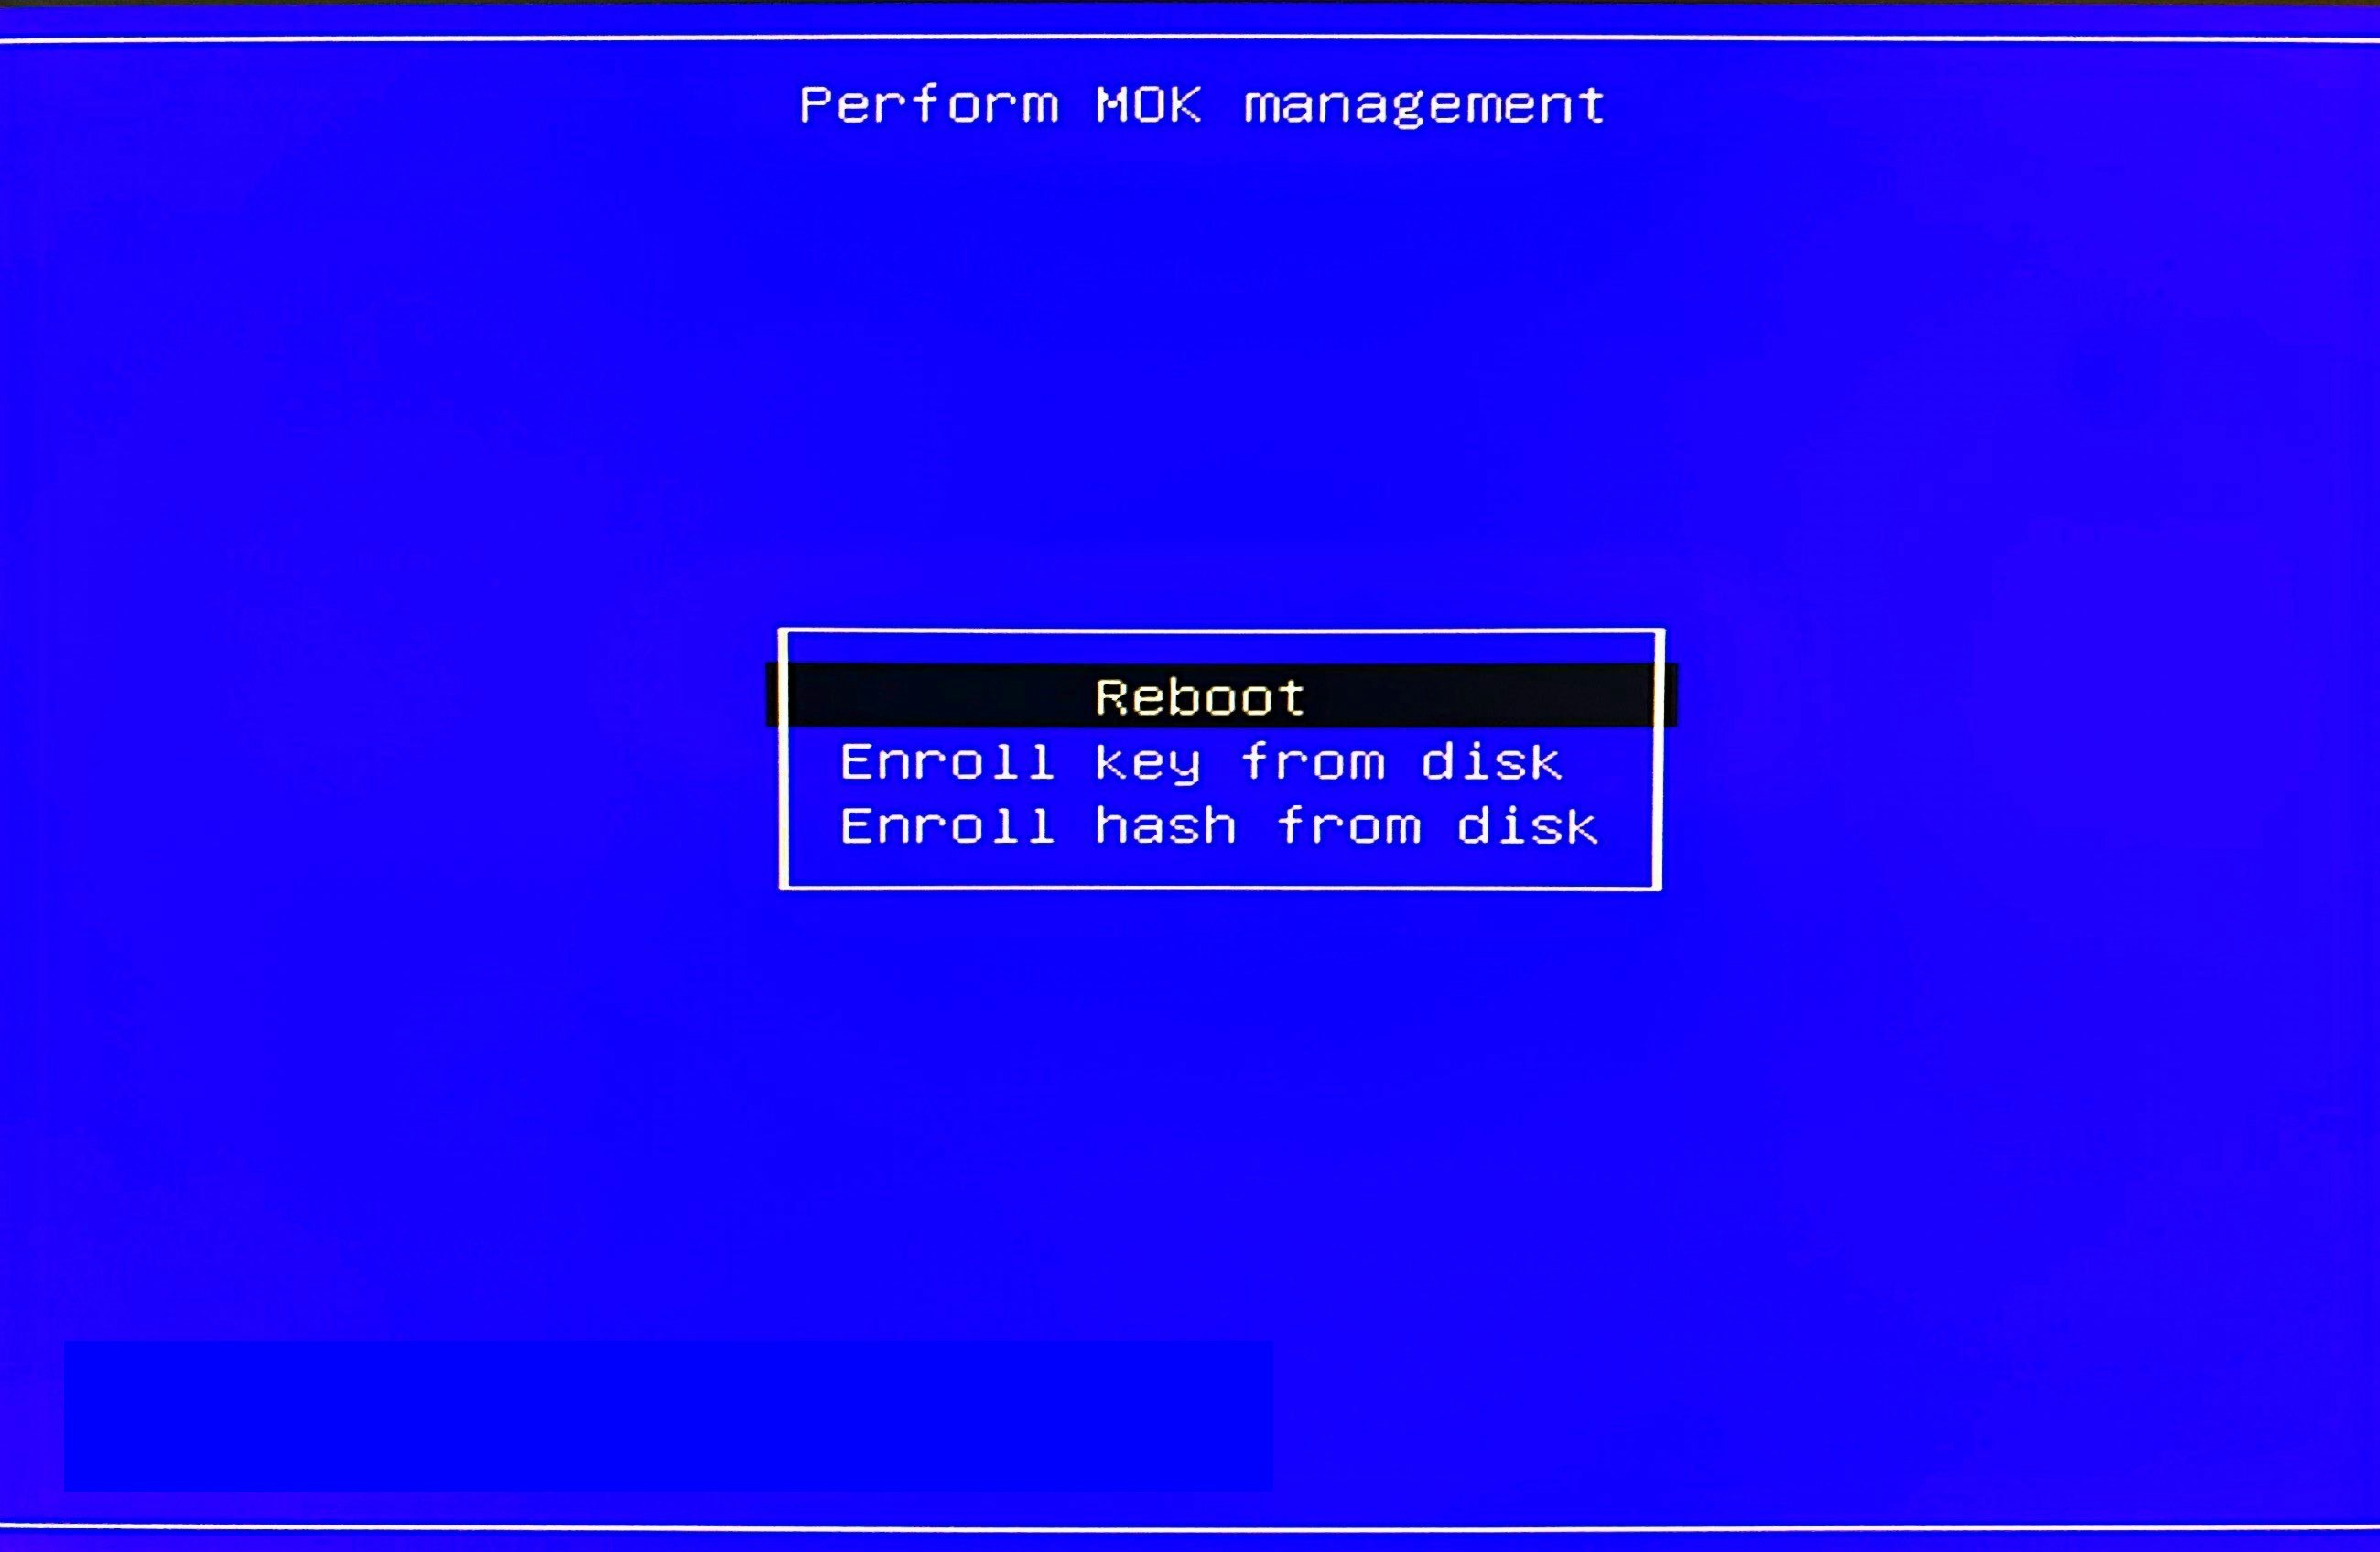 20230210_perform_mok_management_reboot.JPG